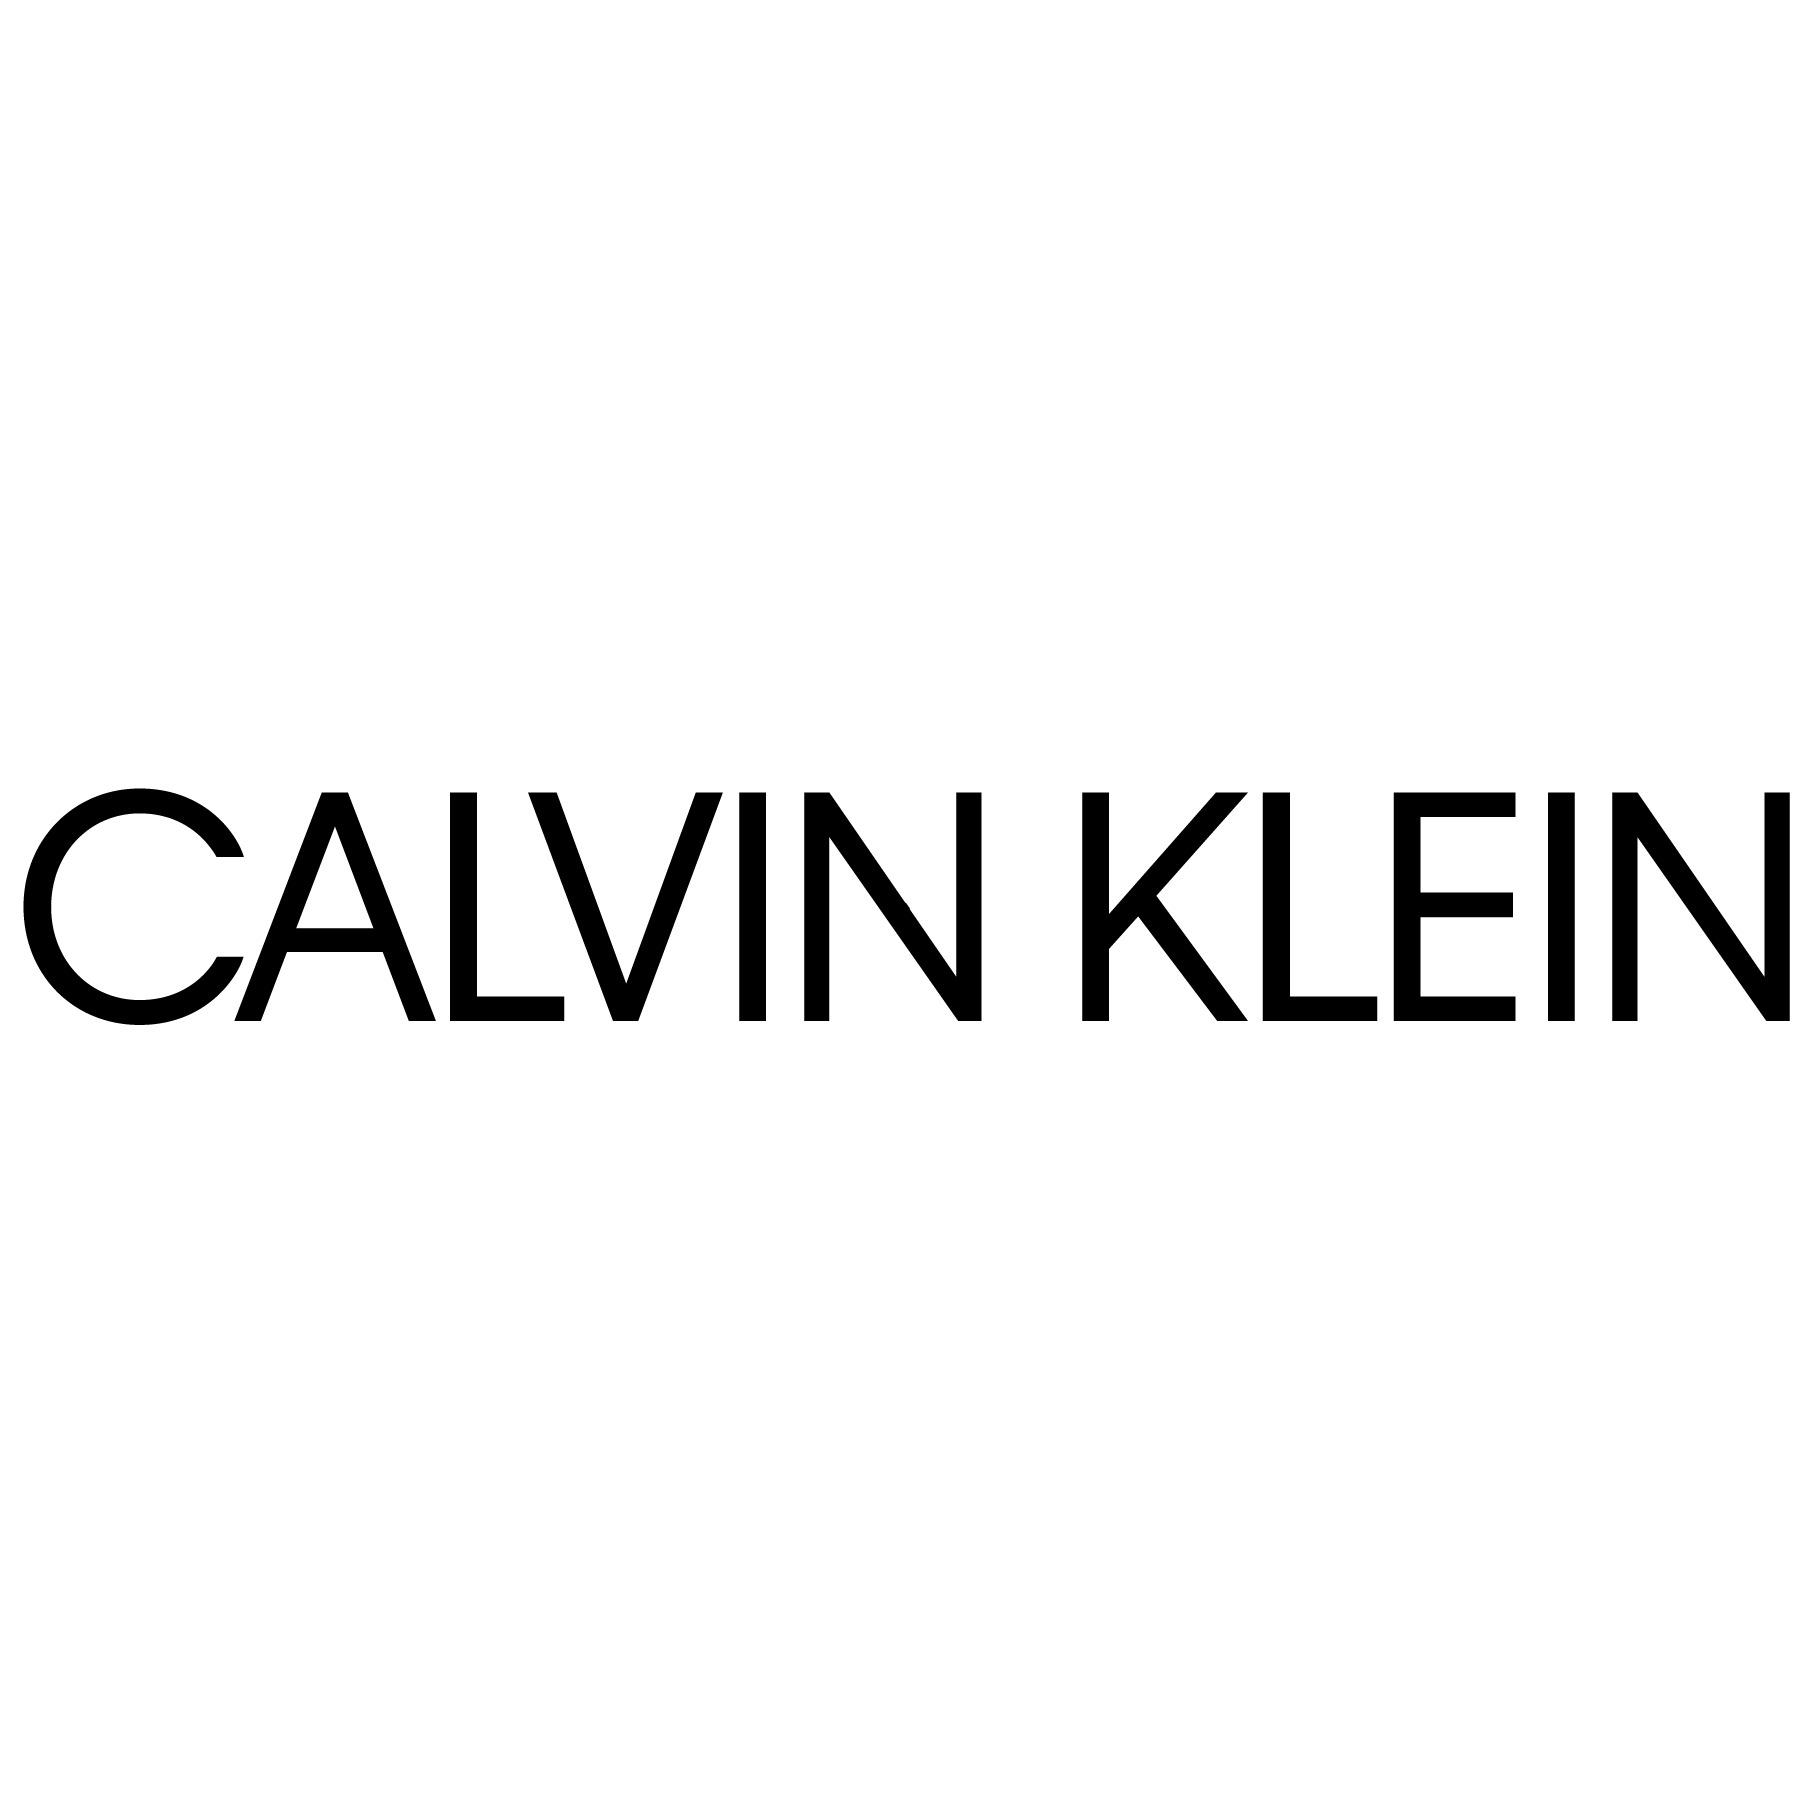 Calvin Klein Clearance Mississauga